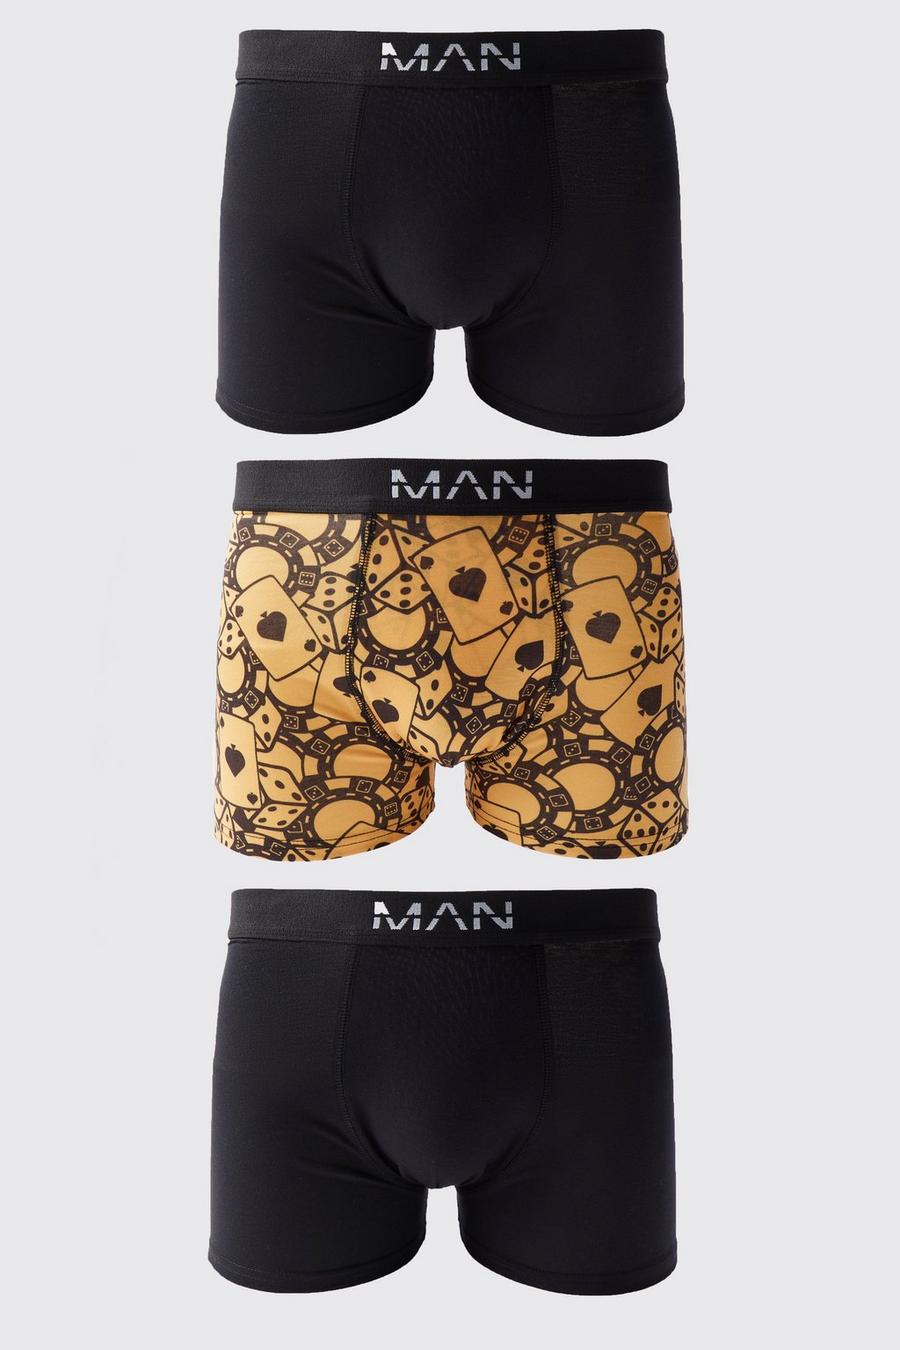 Dice - Bundle Of (3) Printed Boxers For Men & Boys @ Best Price Online